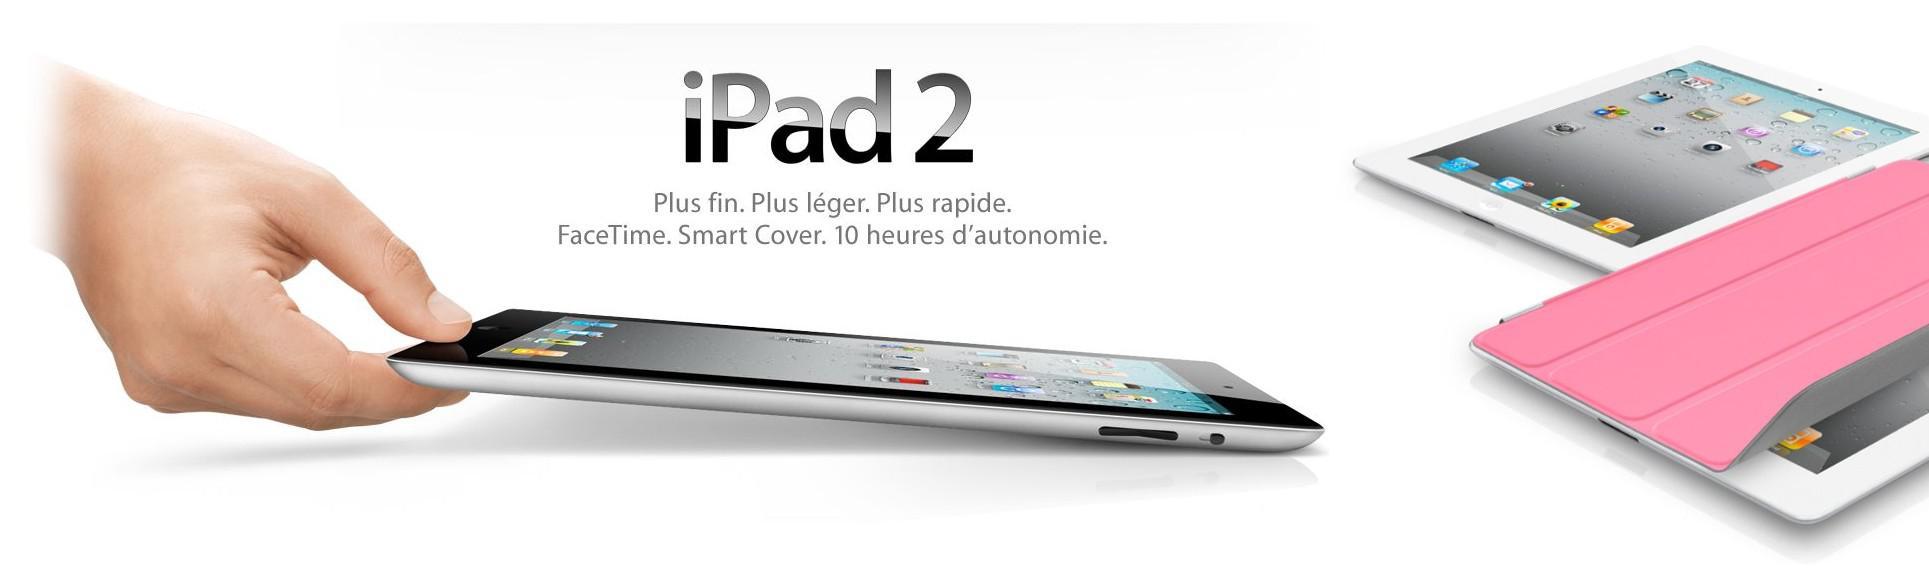 Concours- Gagner un iPad 2